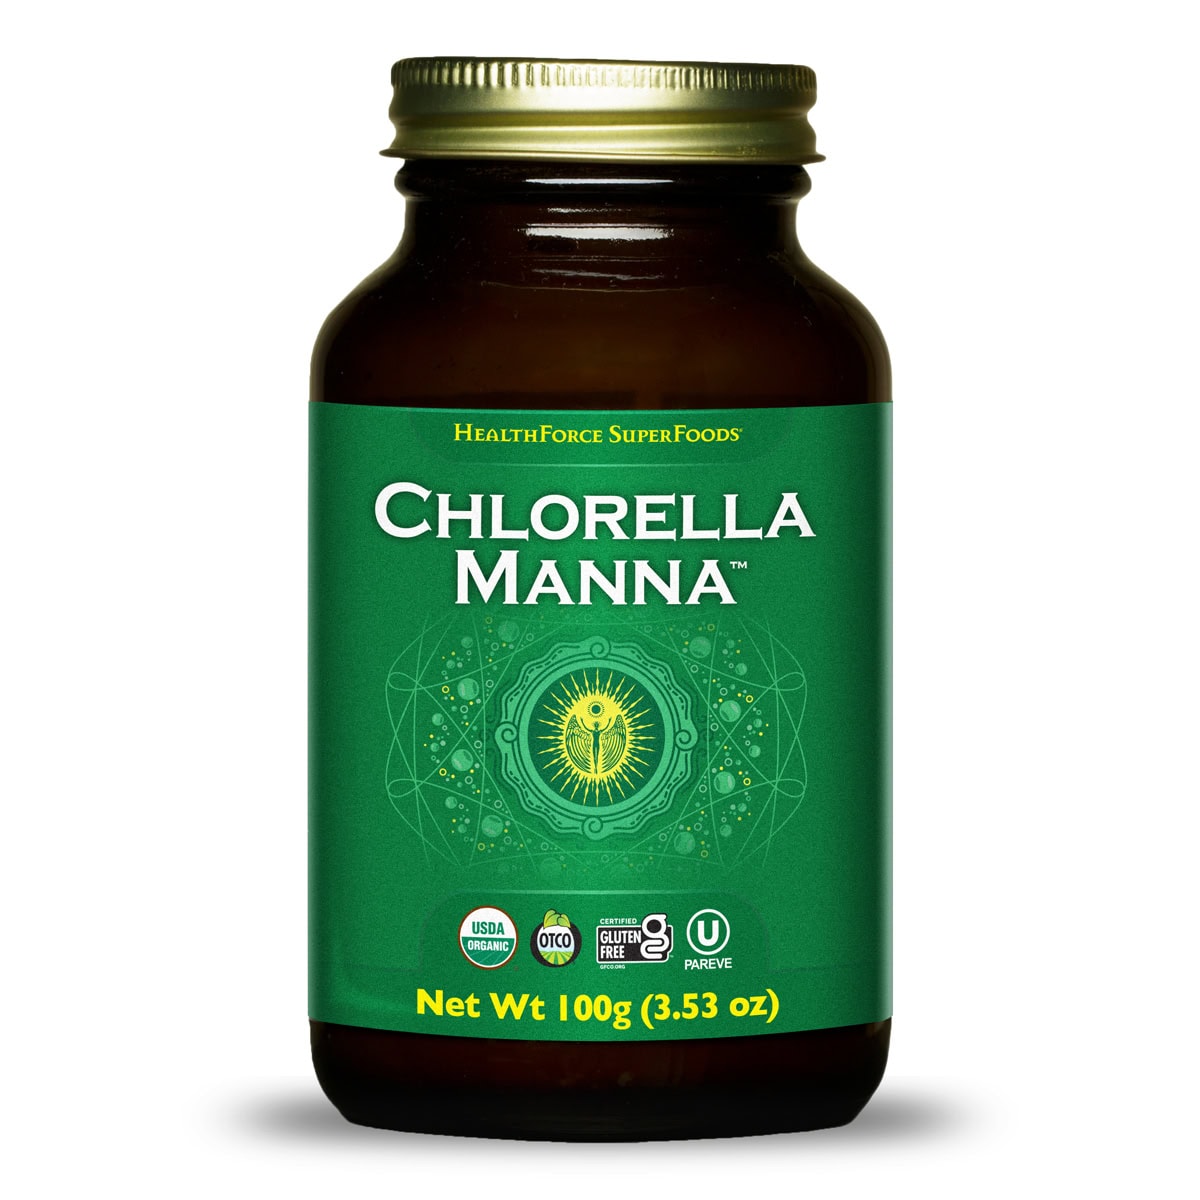 Chlorella Manna™